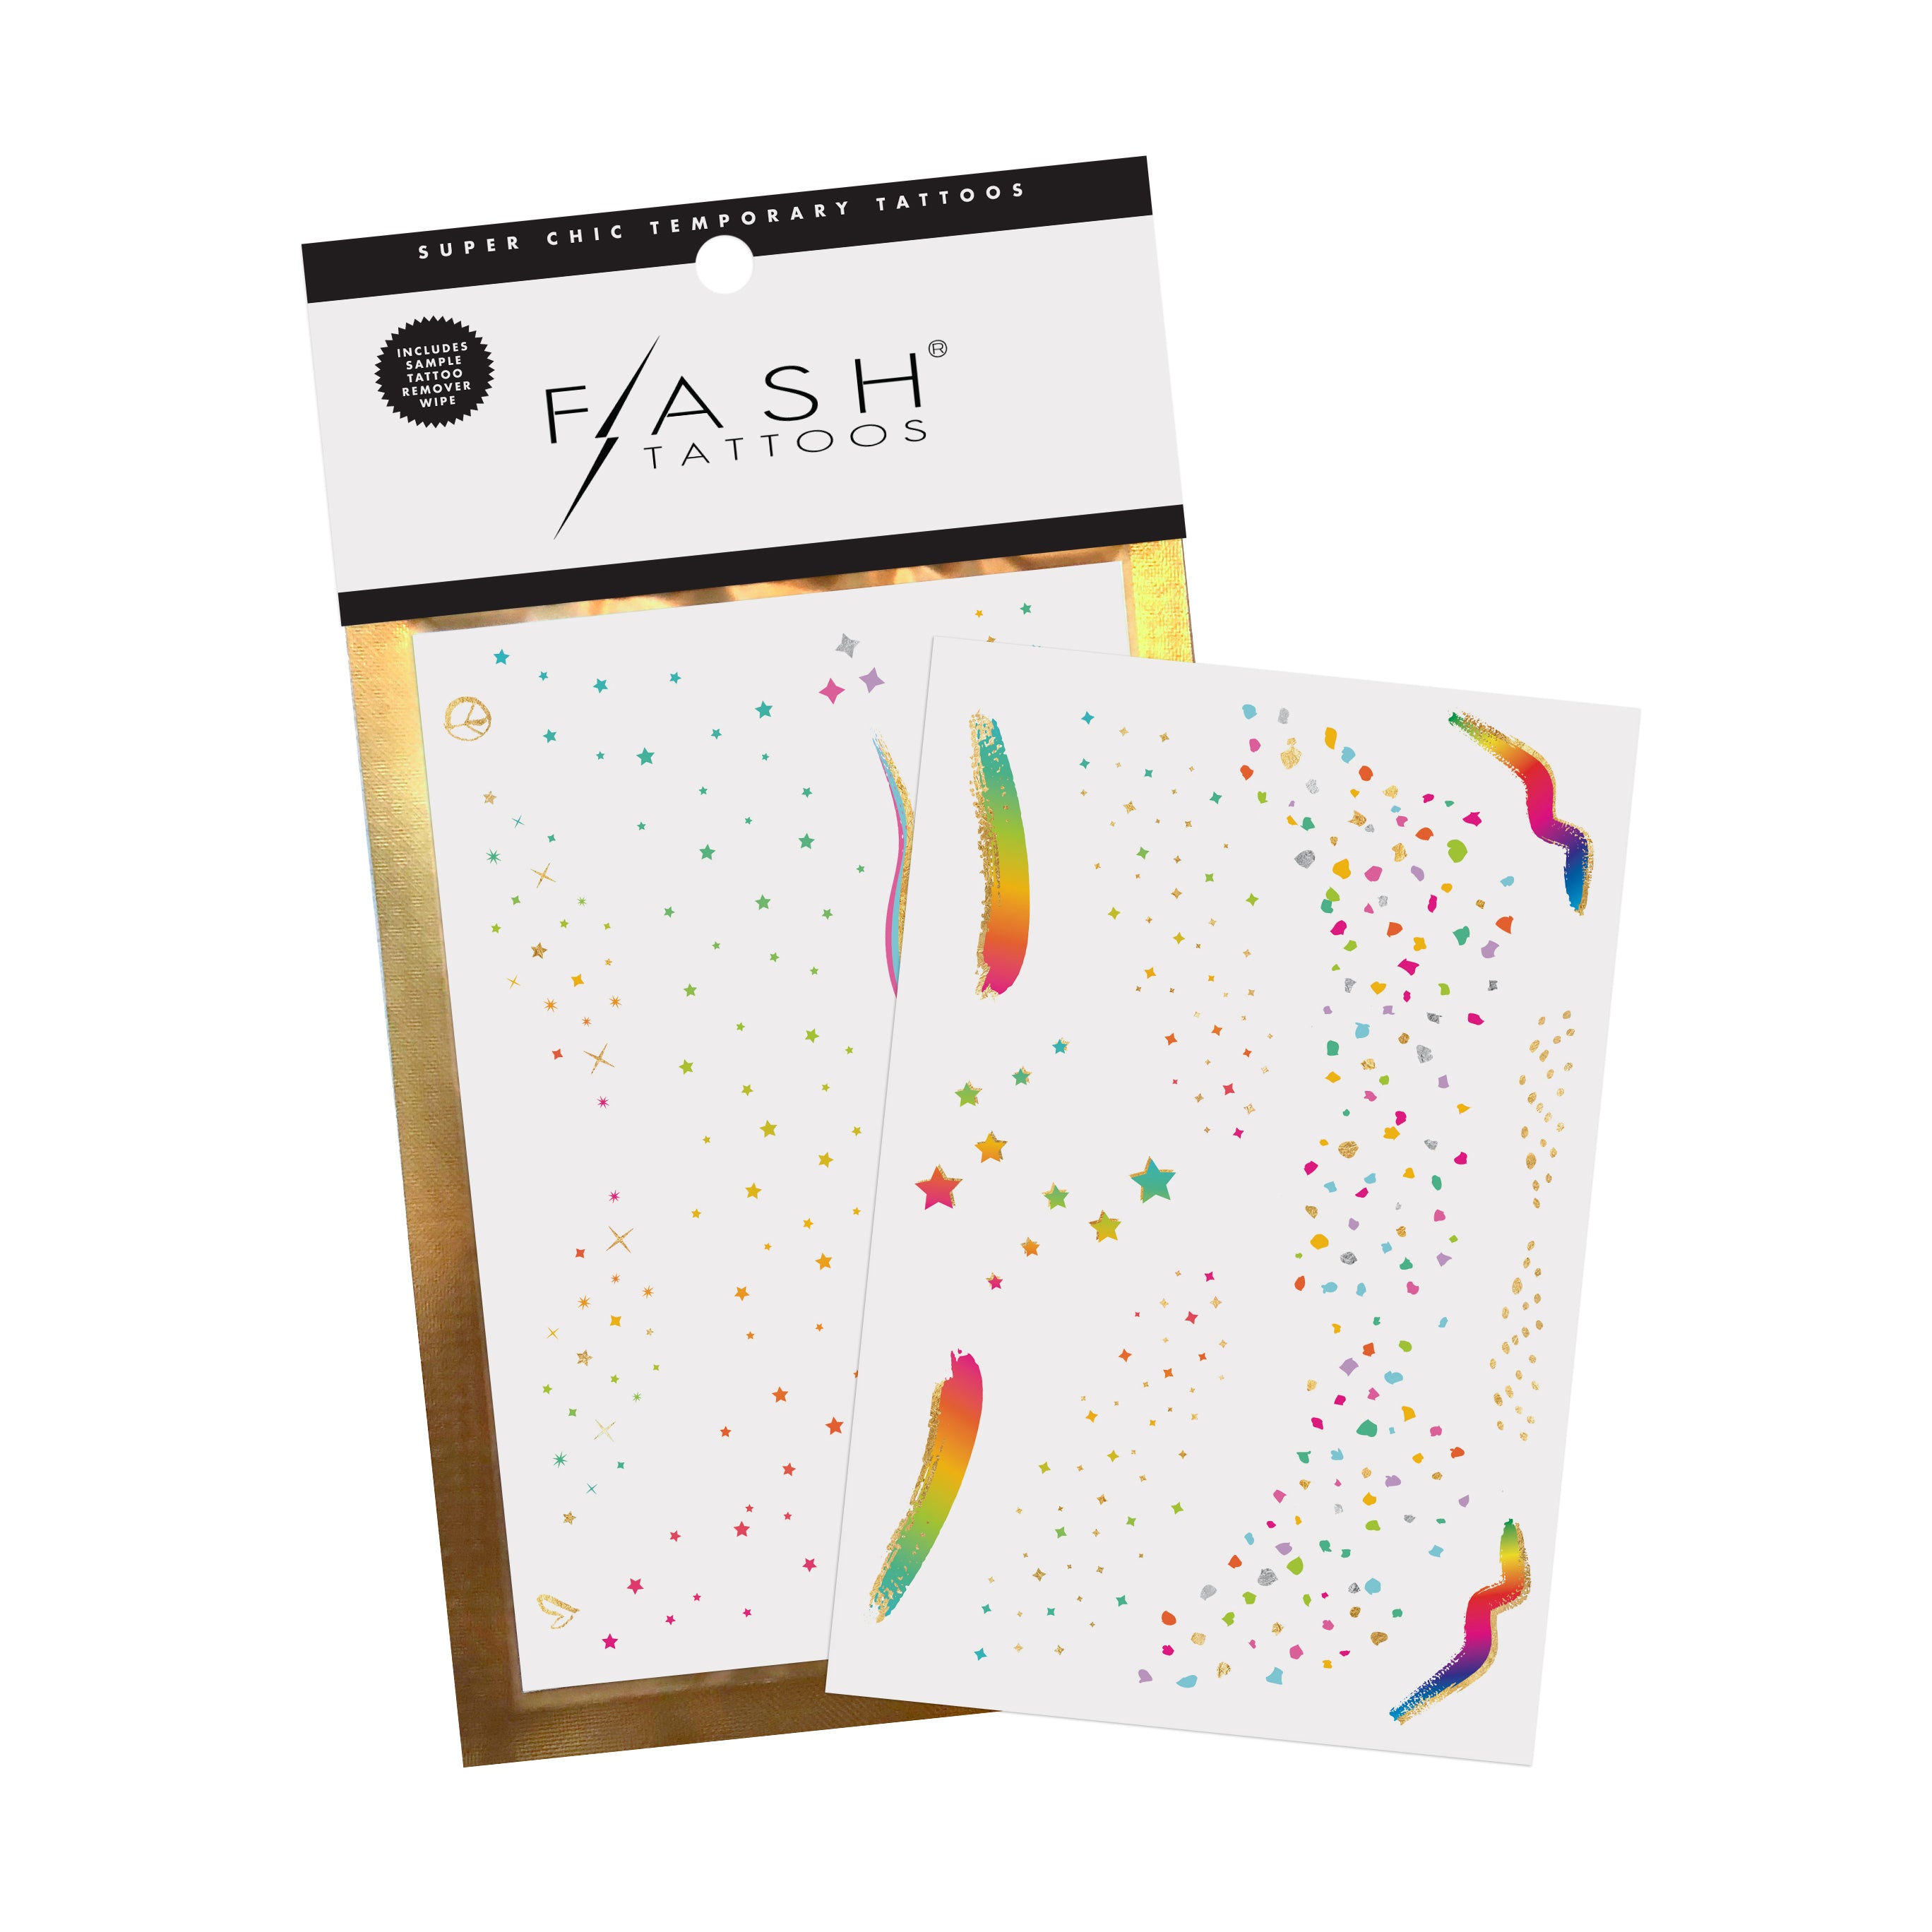 Sparkle in the mini two sheet Kaleidoscope pack full of festive and fun rainbow face tattoo designs. #FLASHTAT @FlashTattoos